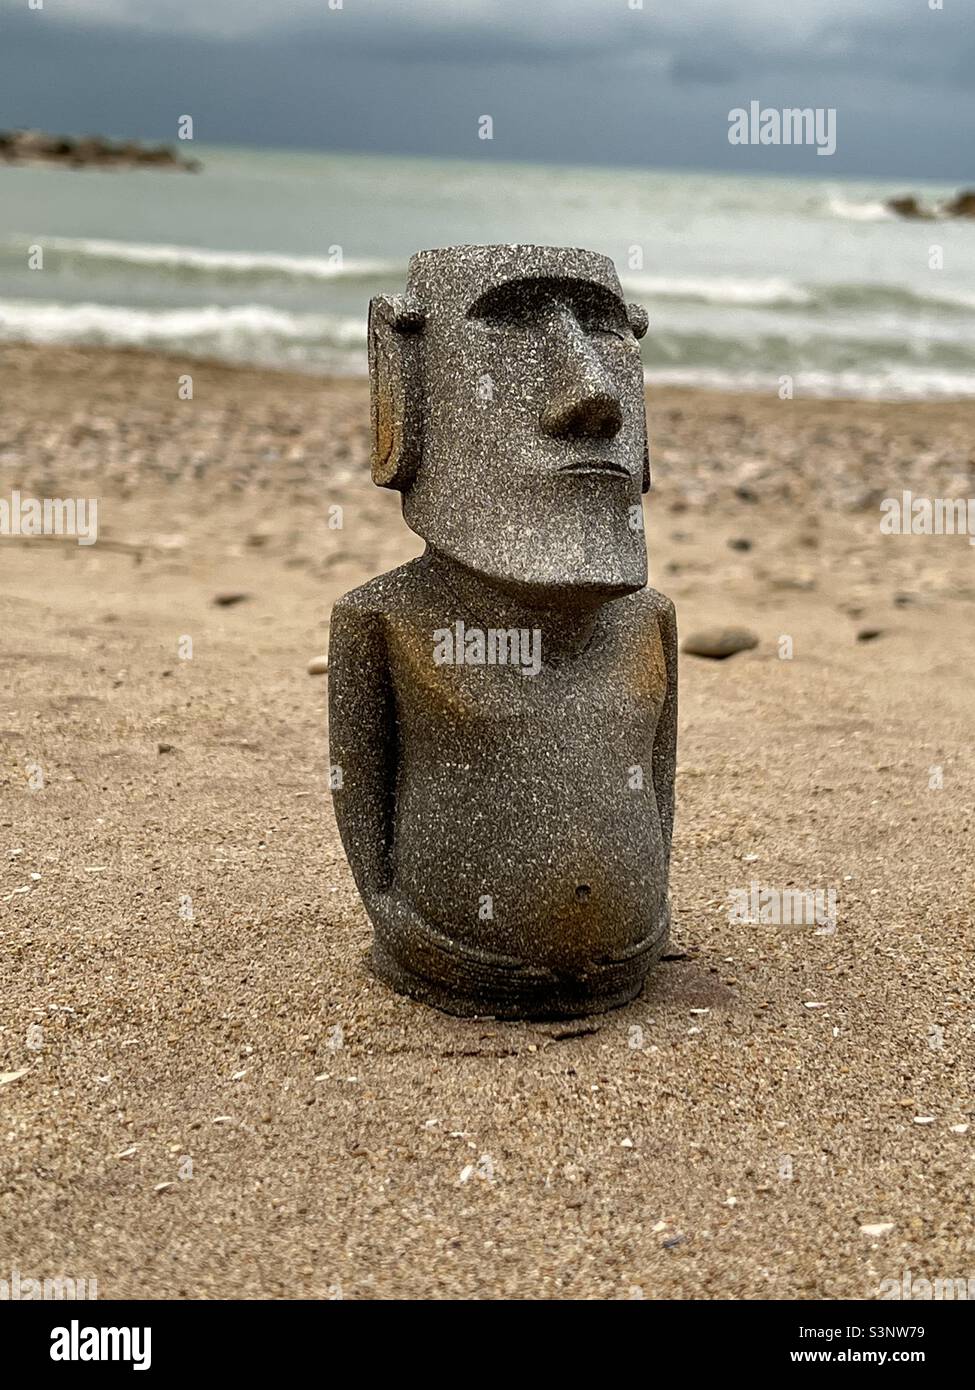 Moai sculpture, souvenir from Easter Island, Rapa Nui, Chile Stock Photo